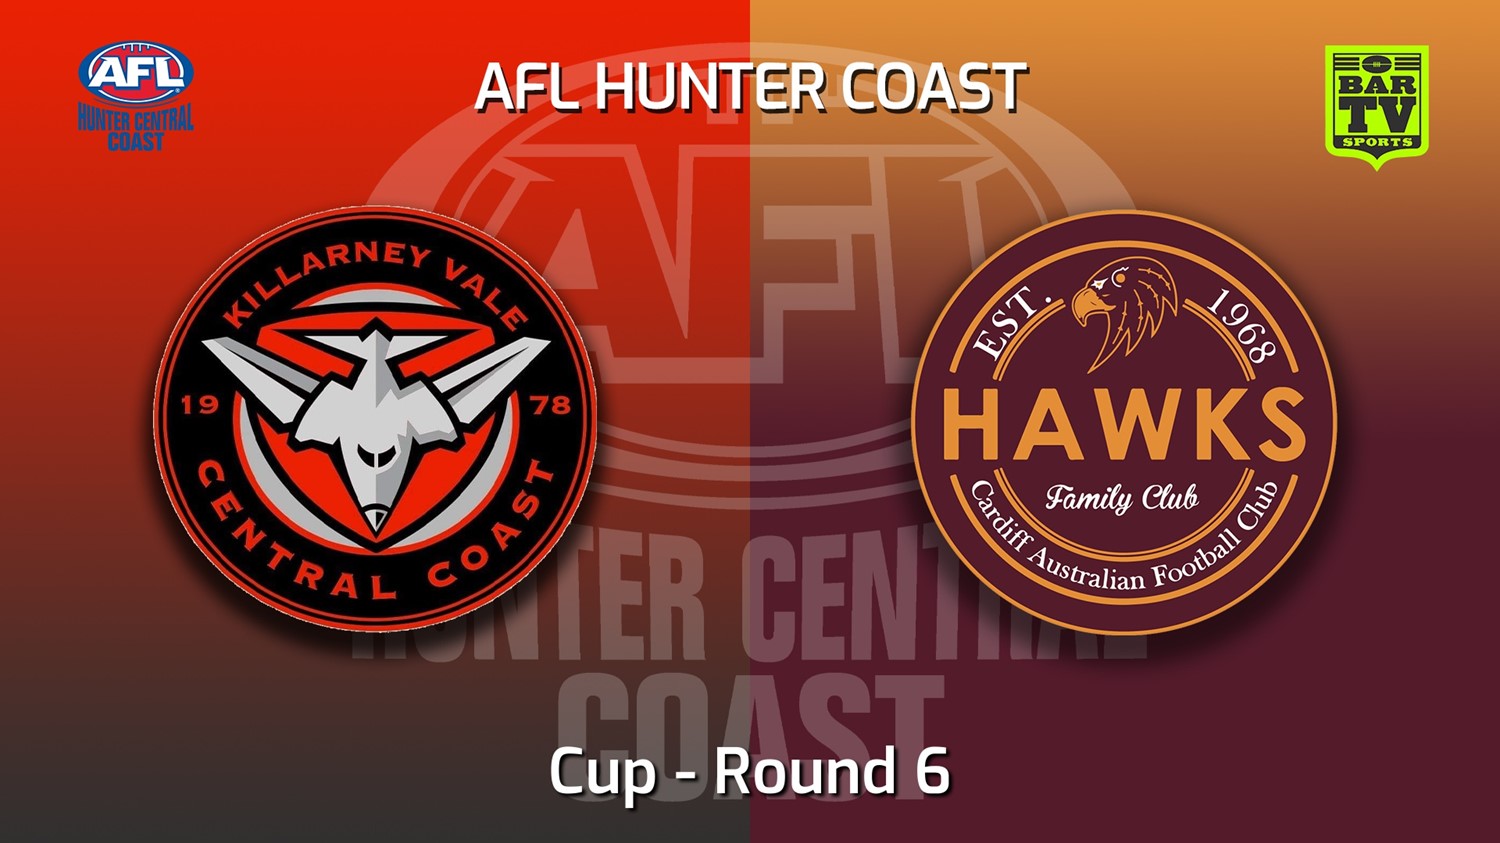 220604-AFL Hunter Central Coast Round 6 - Cup - Killarney Vale Bombers v Cardiff Hawks Slate Image